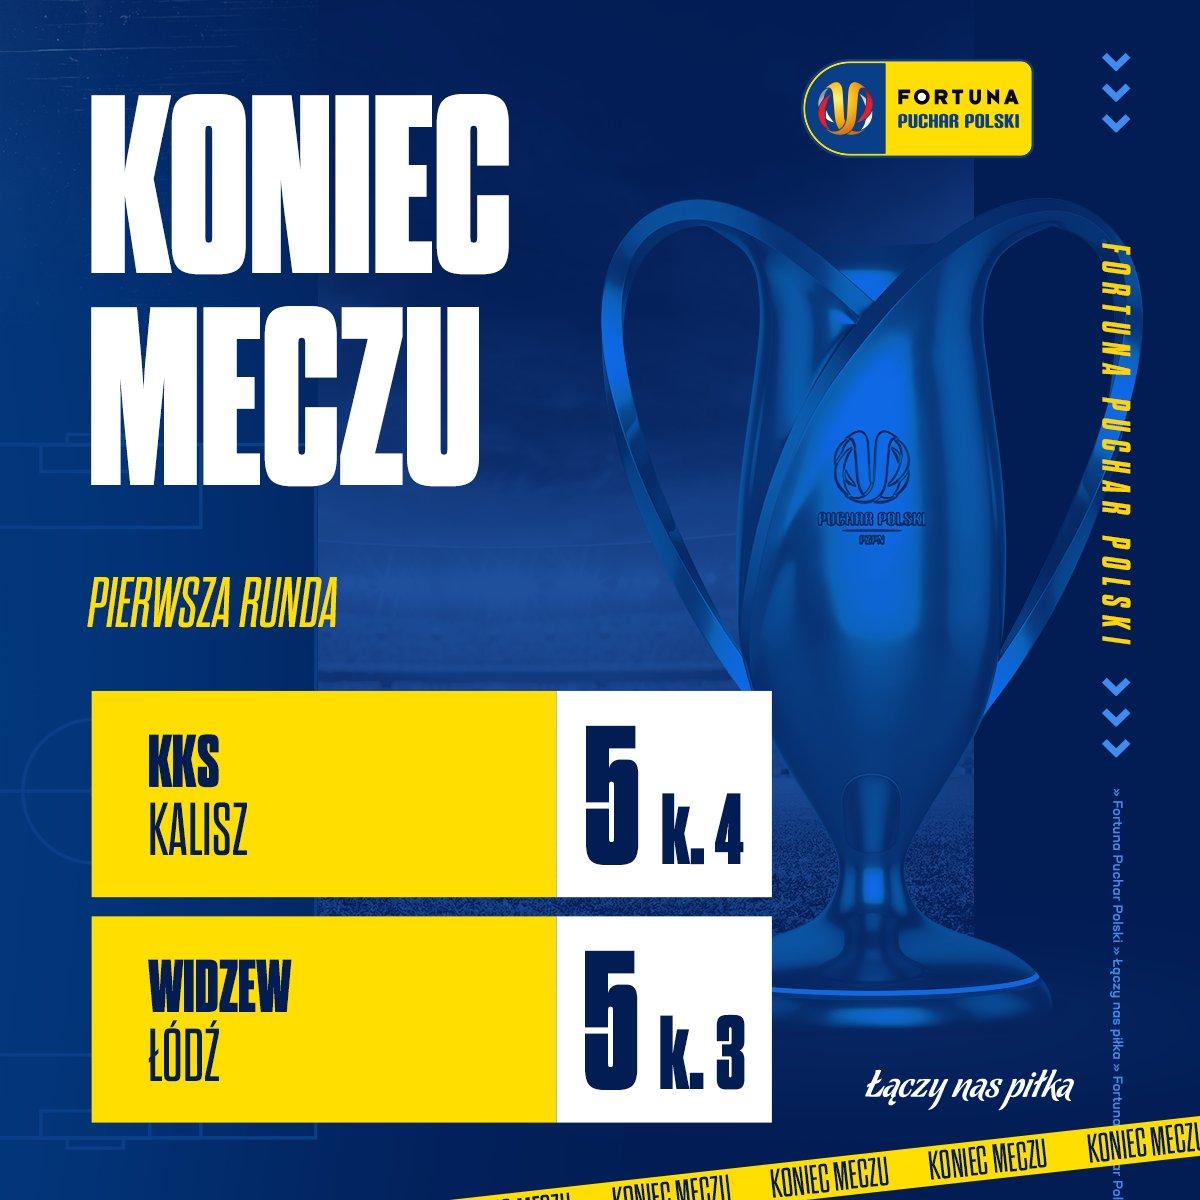 KKS Kalisz - Widzew Łódź 5:5, k. 4-3 (31.08.2022)